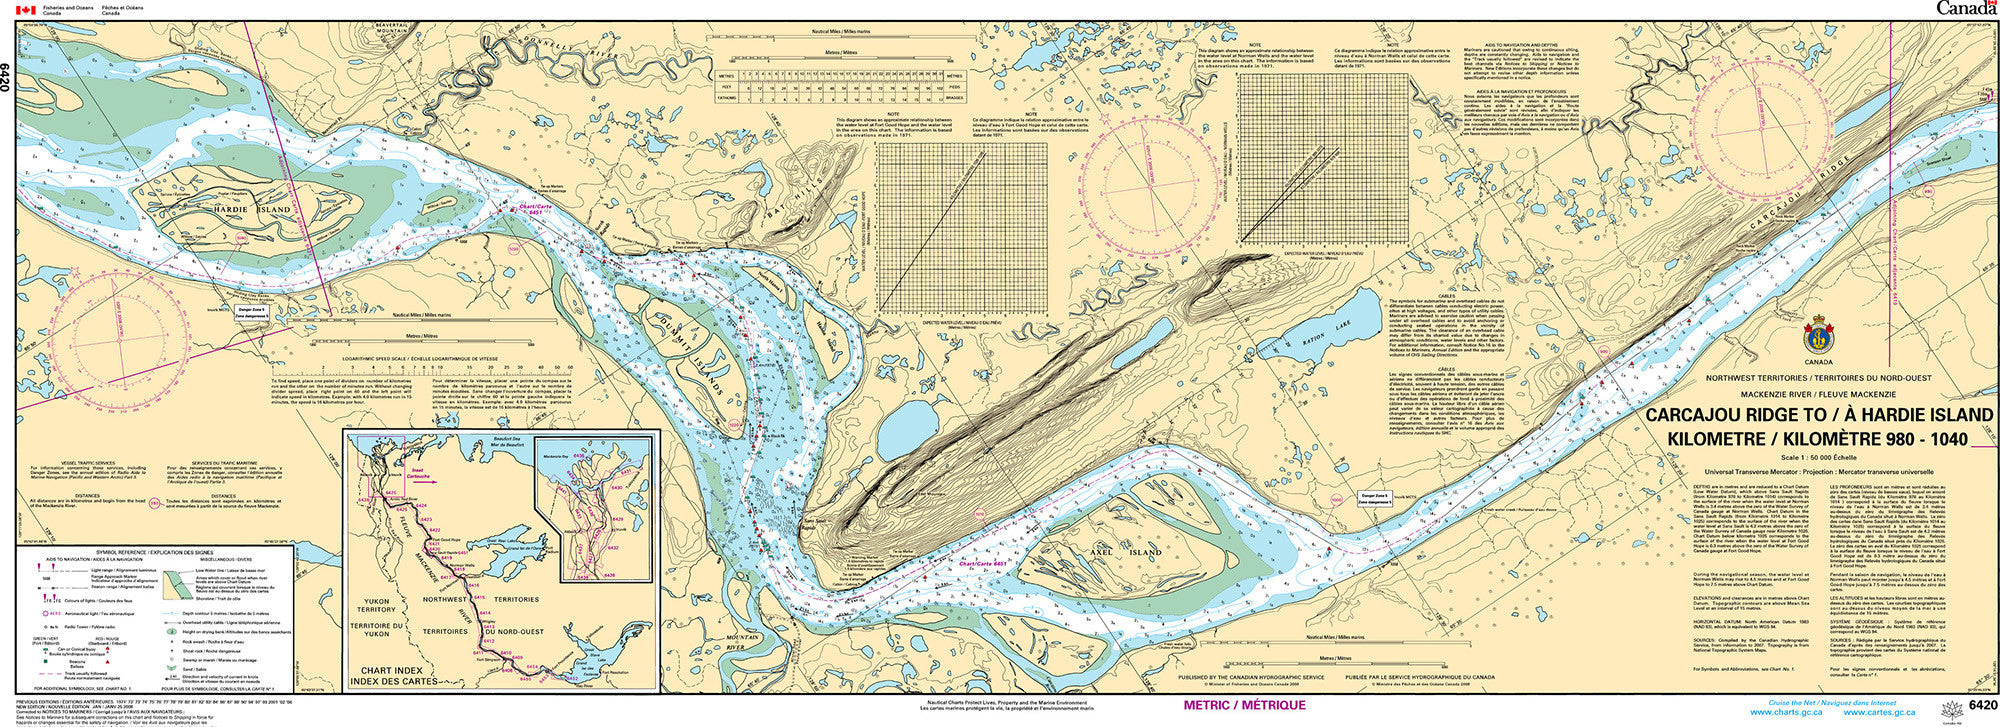 Canadian Hydrographic Service Nautical Chart CHS6420: Carcajou Ridge to/à Hardie Island Kilometre 980 / Kilometre 1040